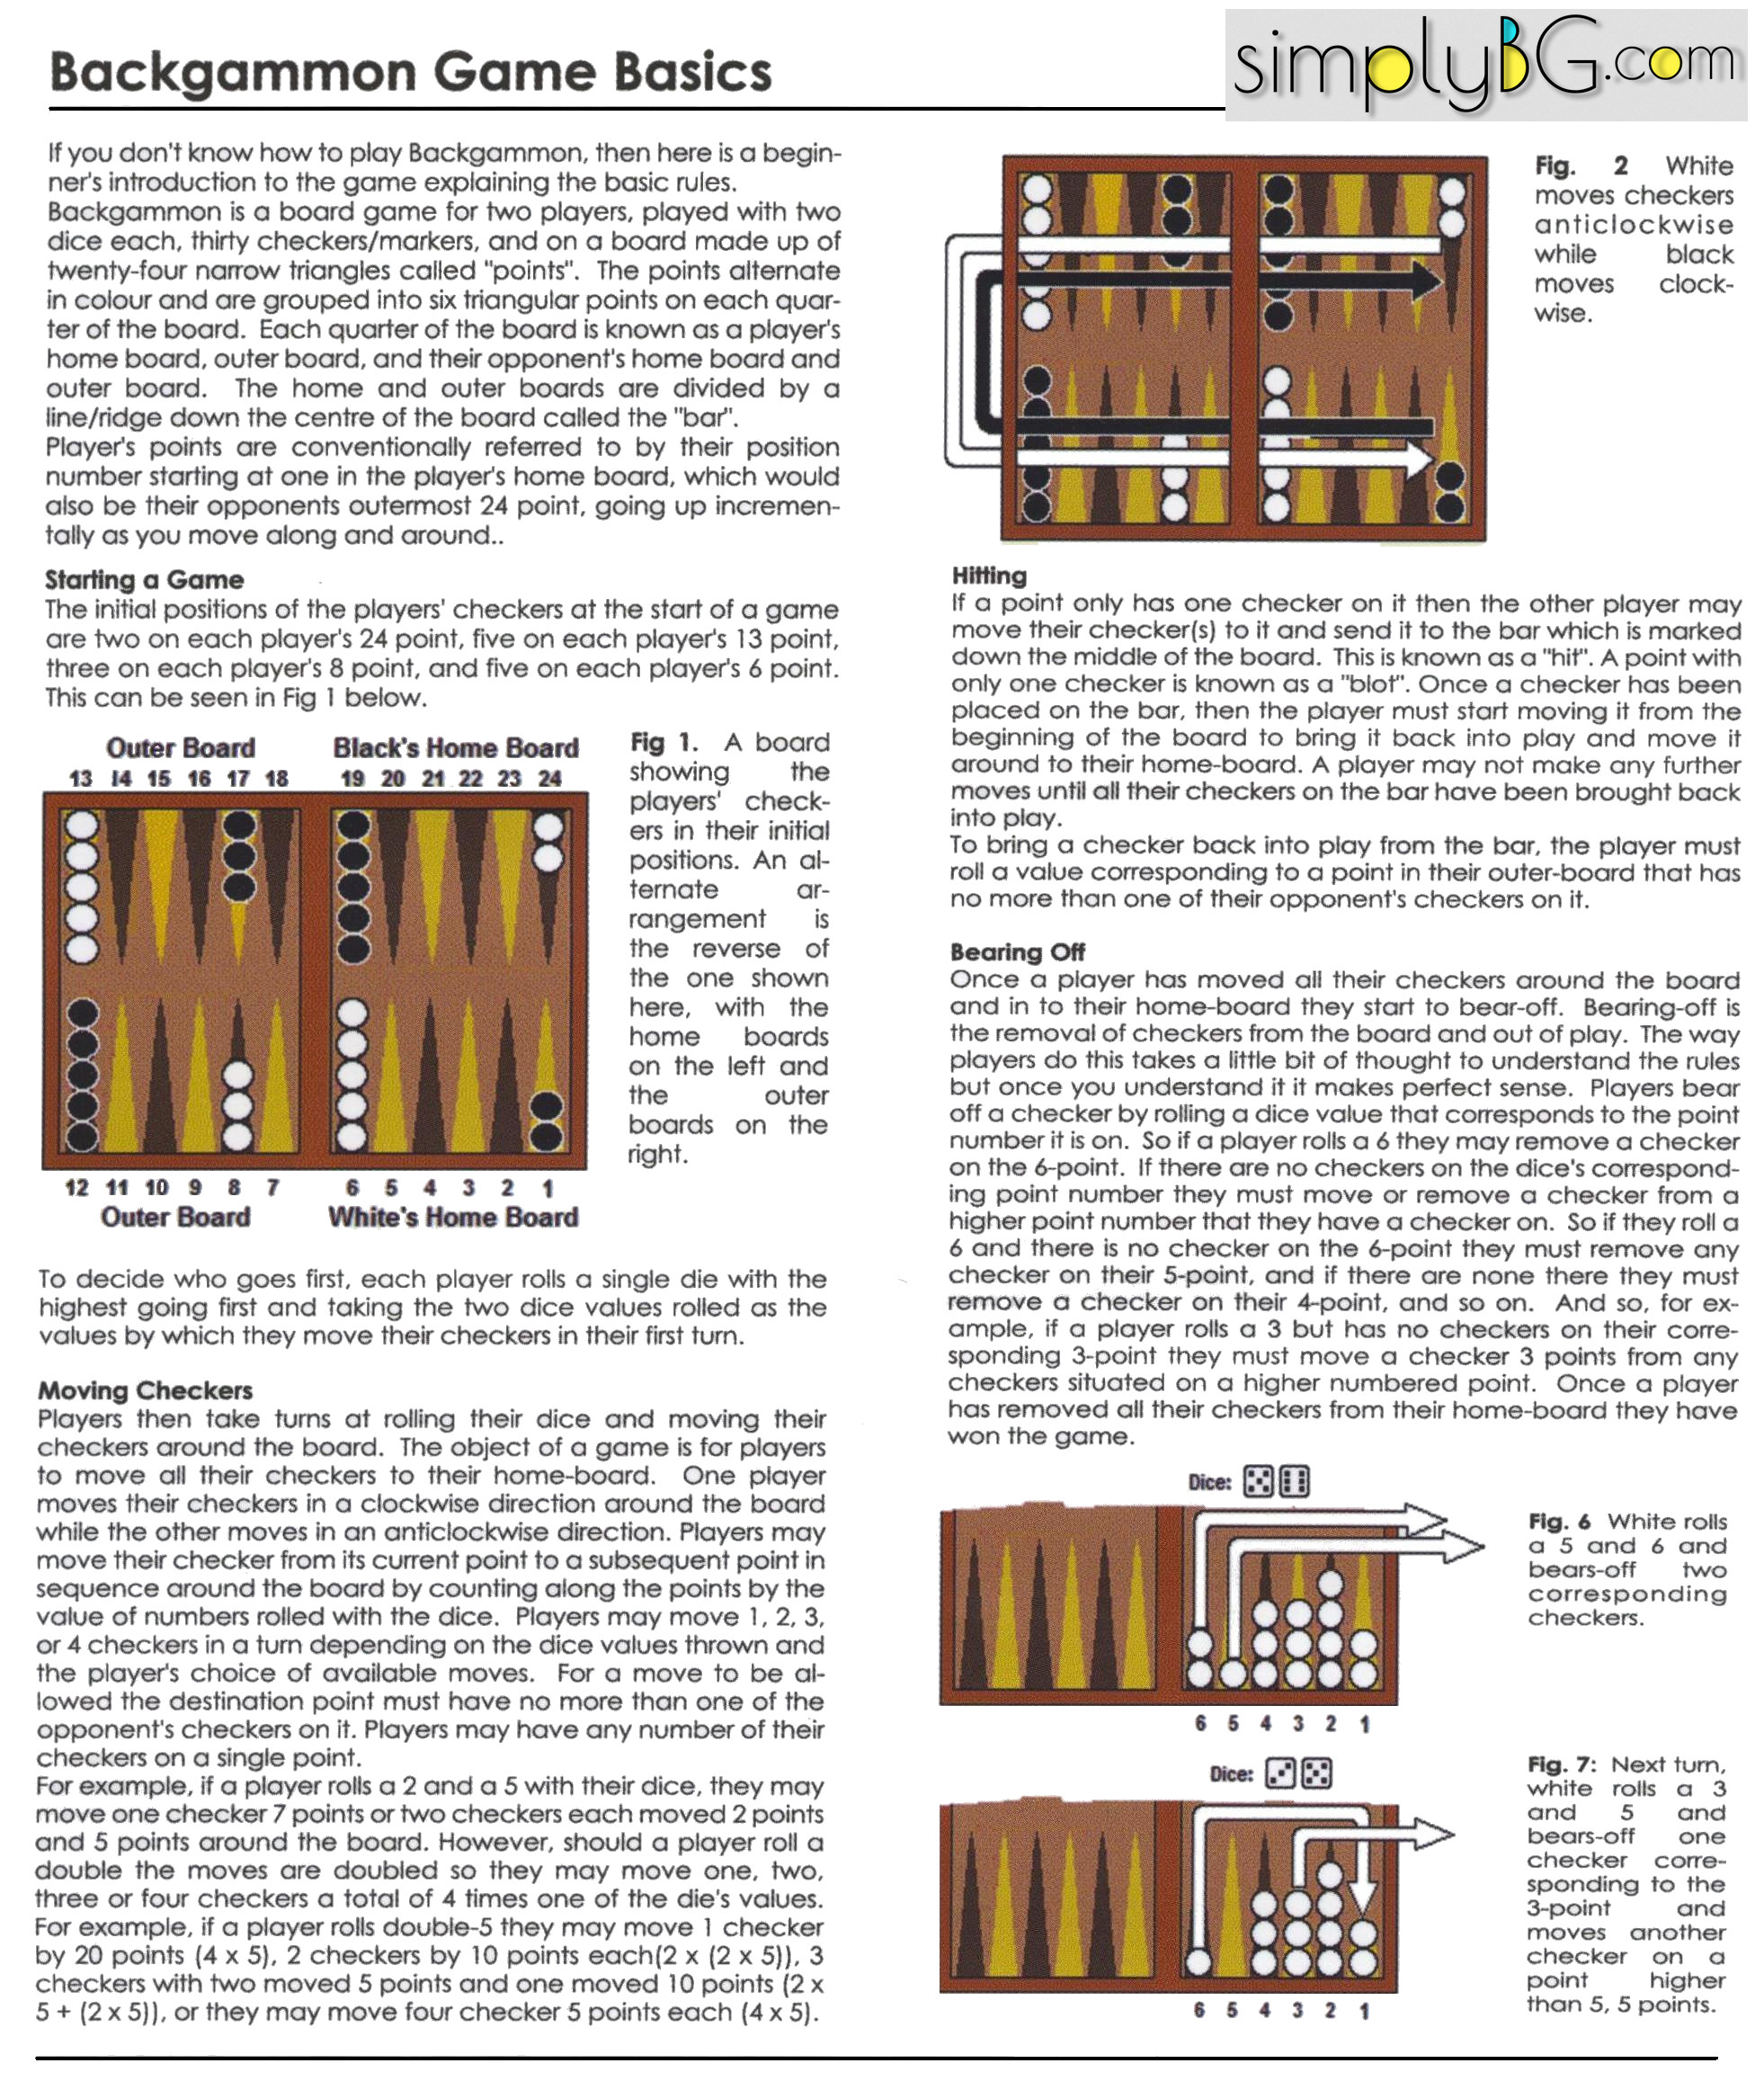 simplybg-backgammon-rules